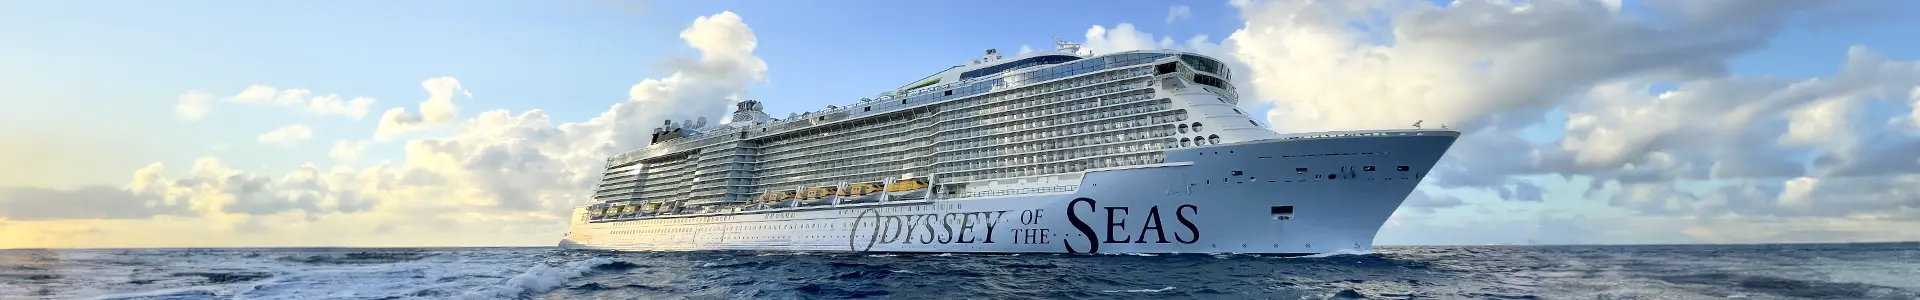 海洋奥德赛号（Odyssey of the Seas）